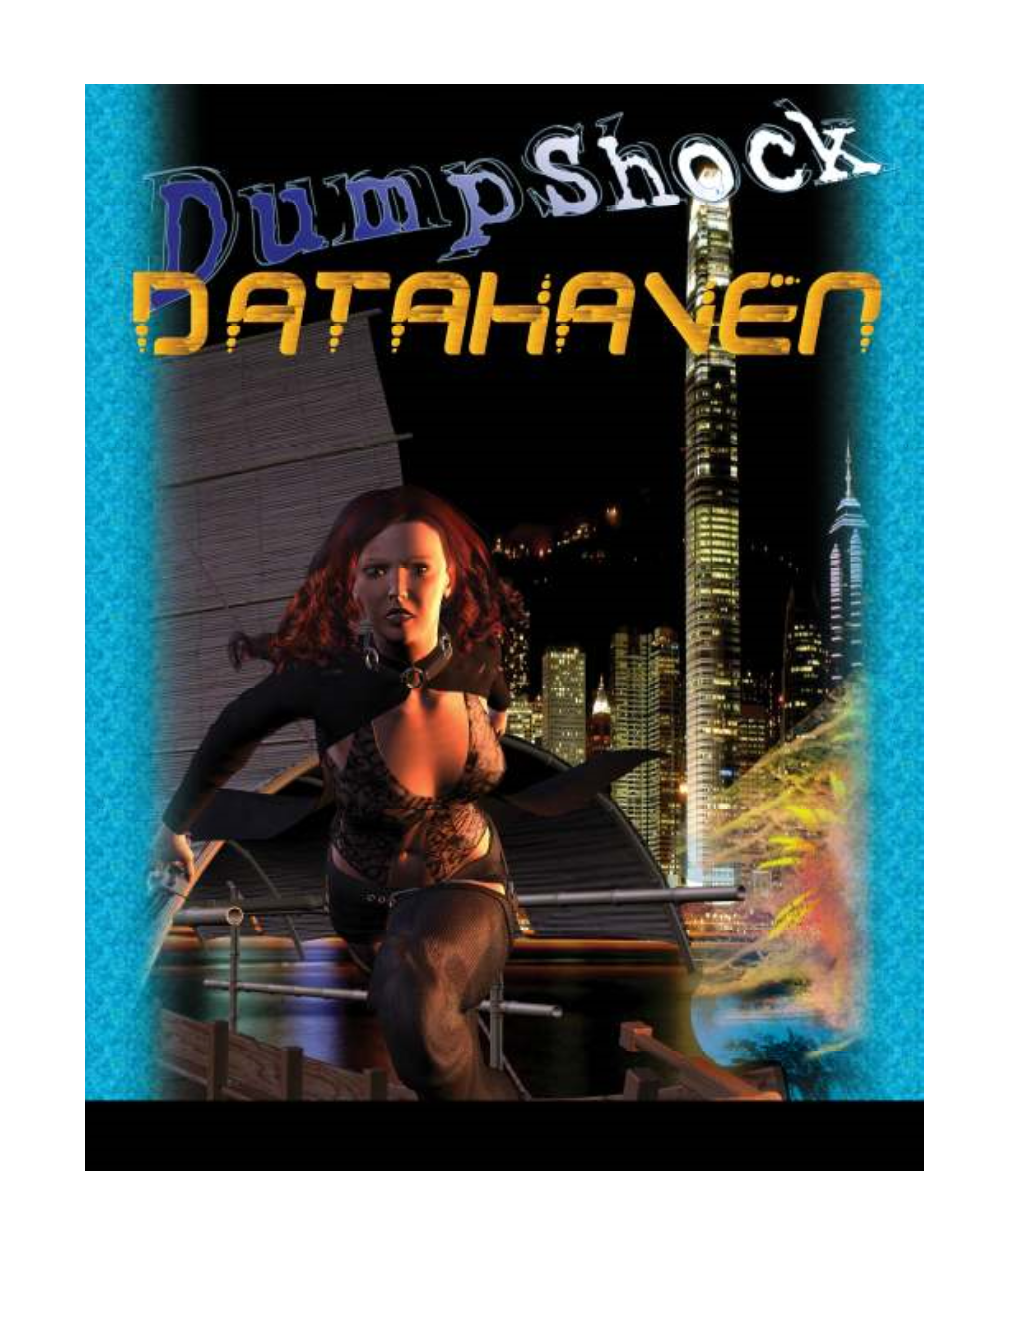 Dumpshock Datahaven Volume #1